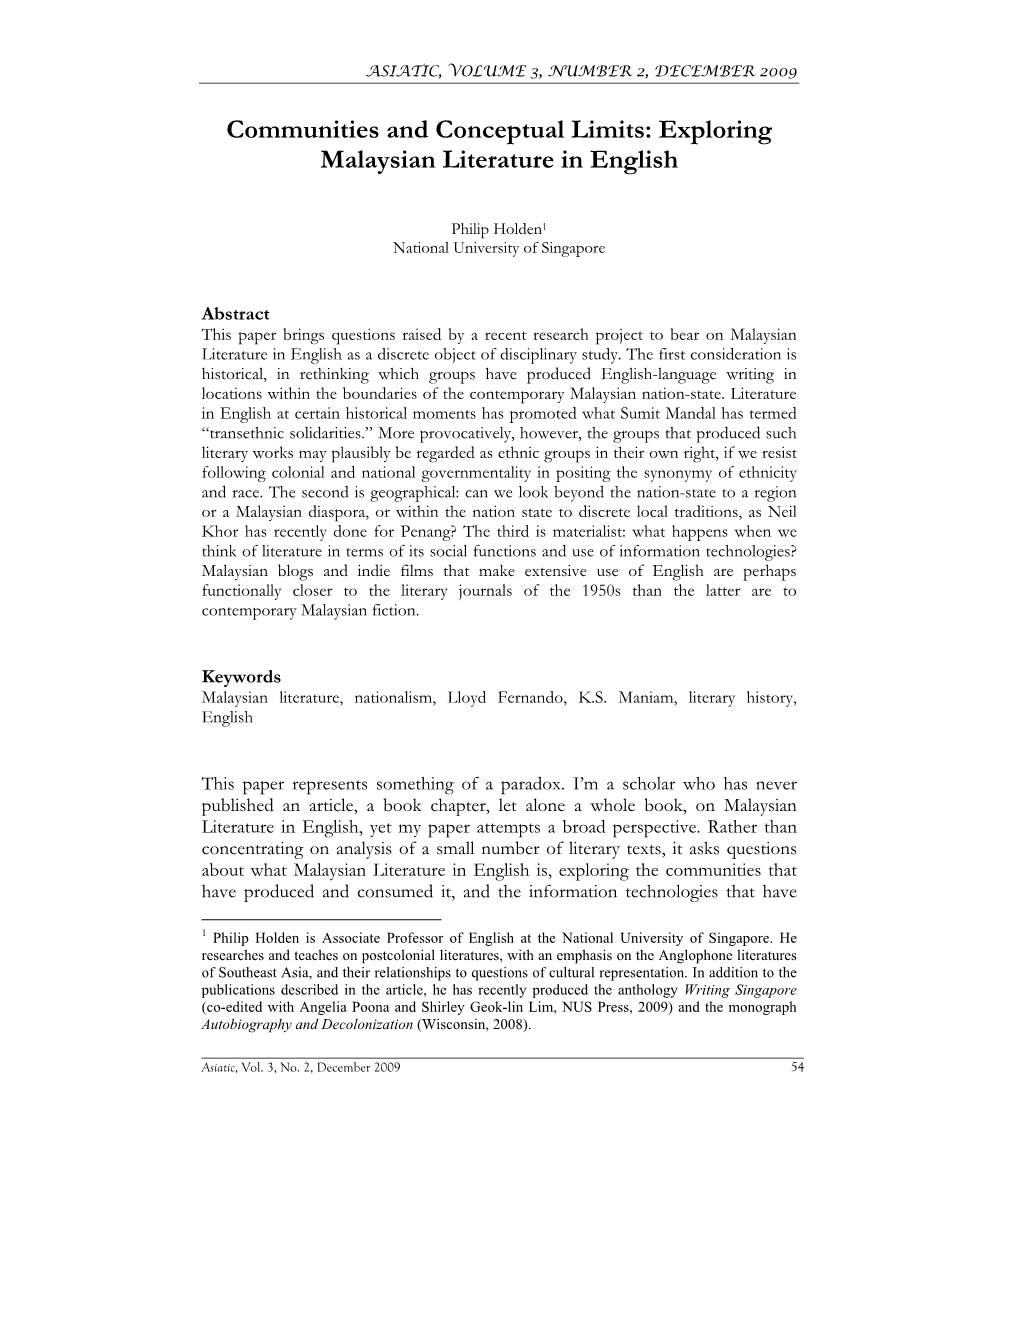 Exploring Malaysian Literature in English